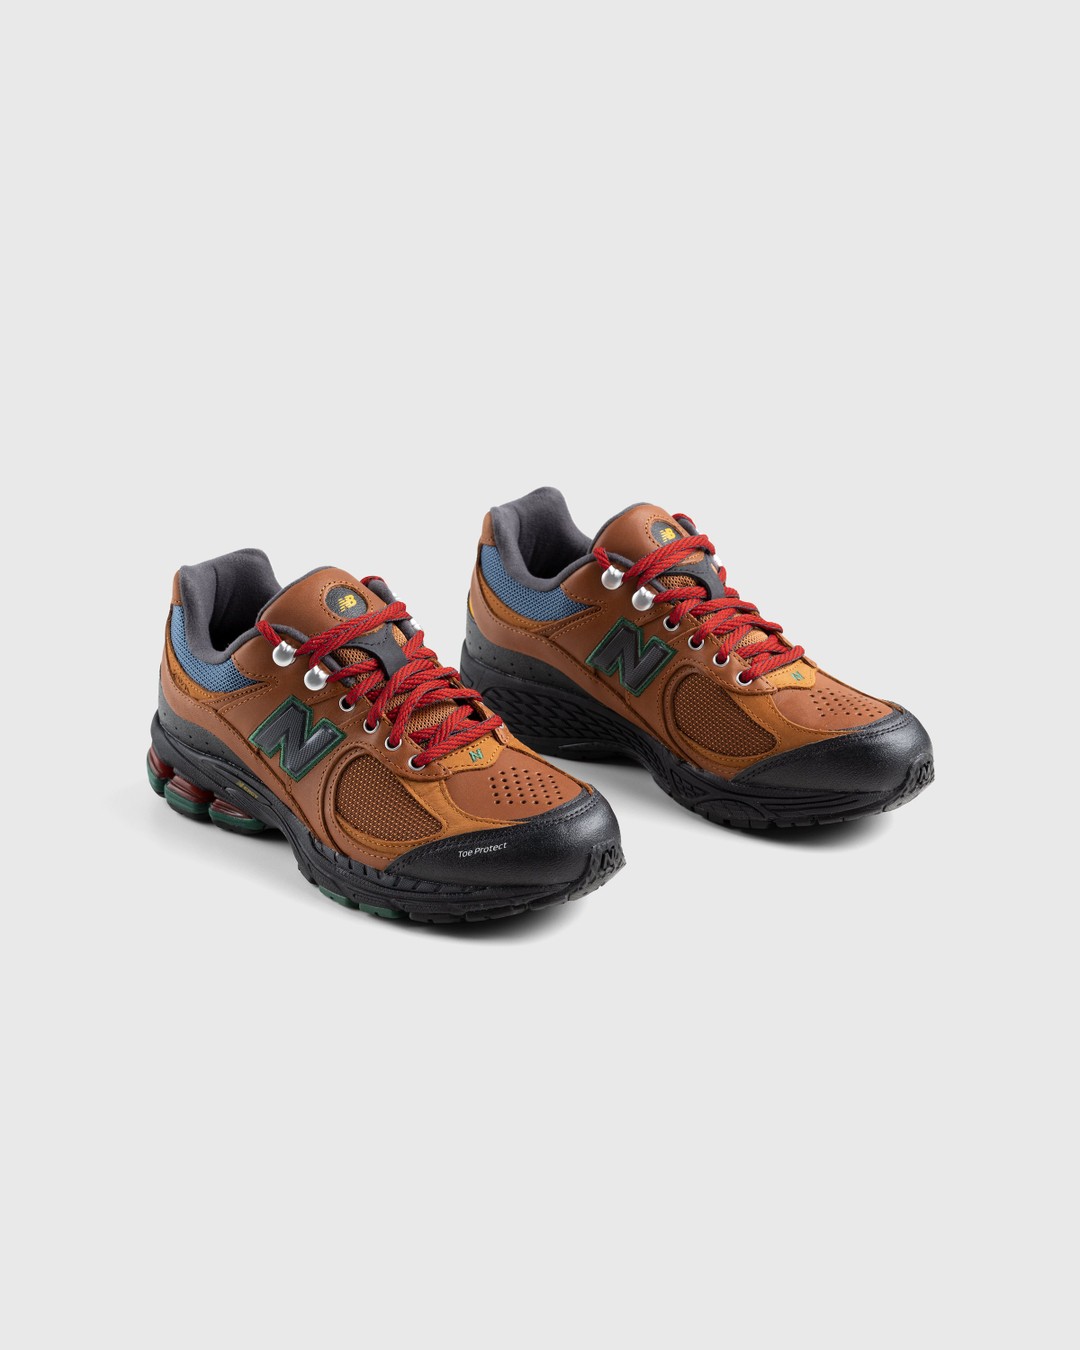 New Balance – M2002RWM Brown/Team Red - Sneakers - Brown - Image 3